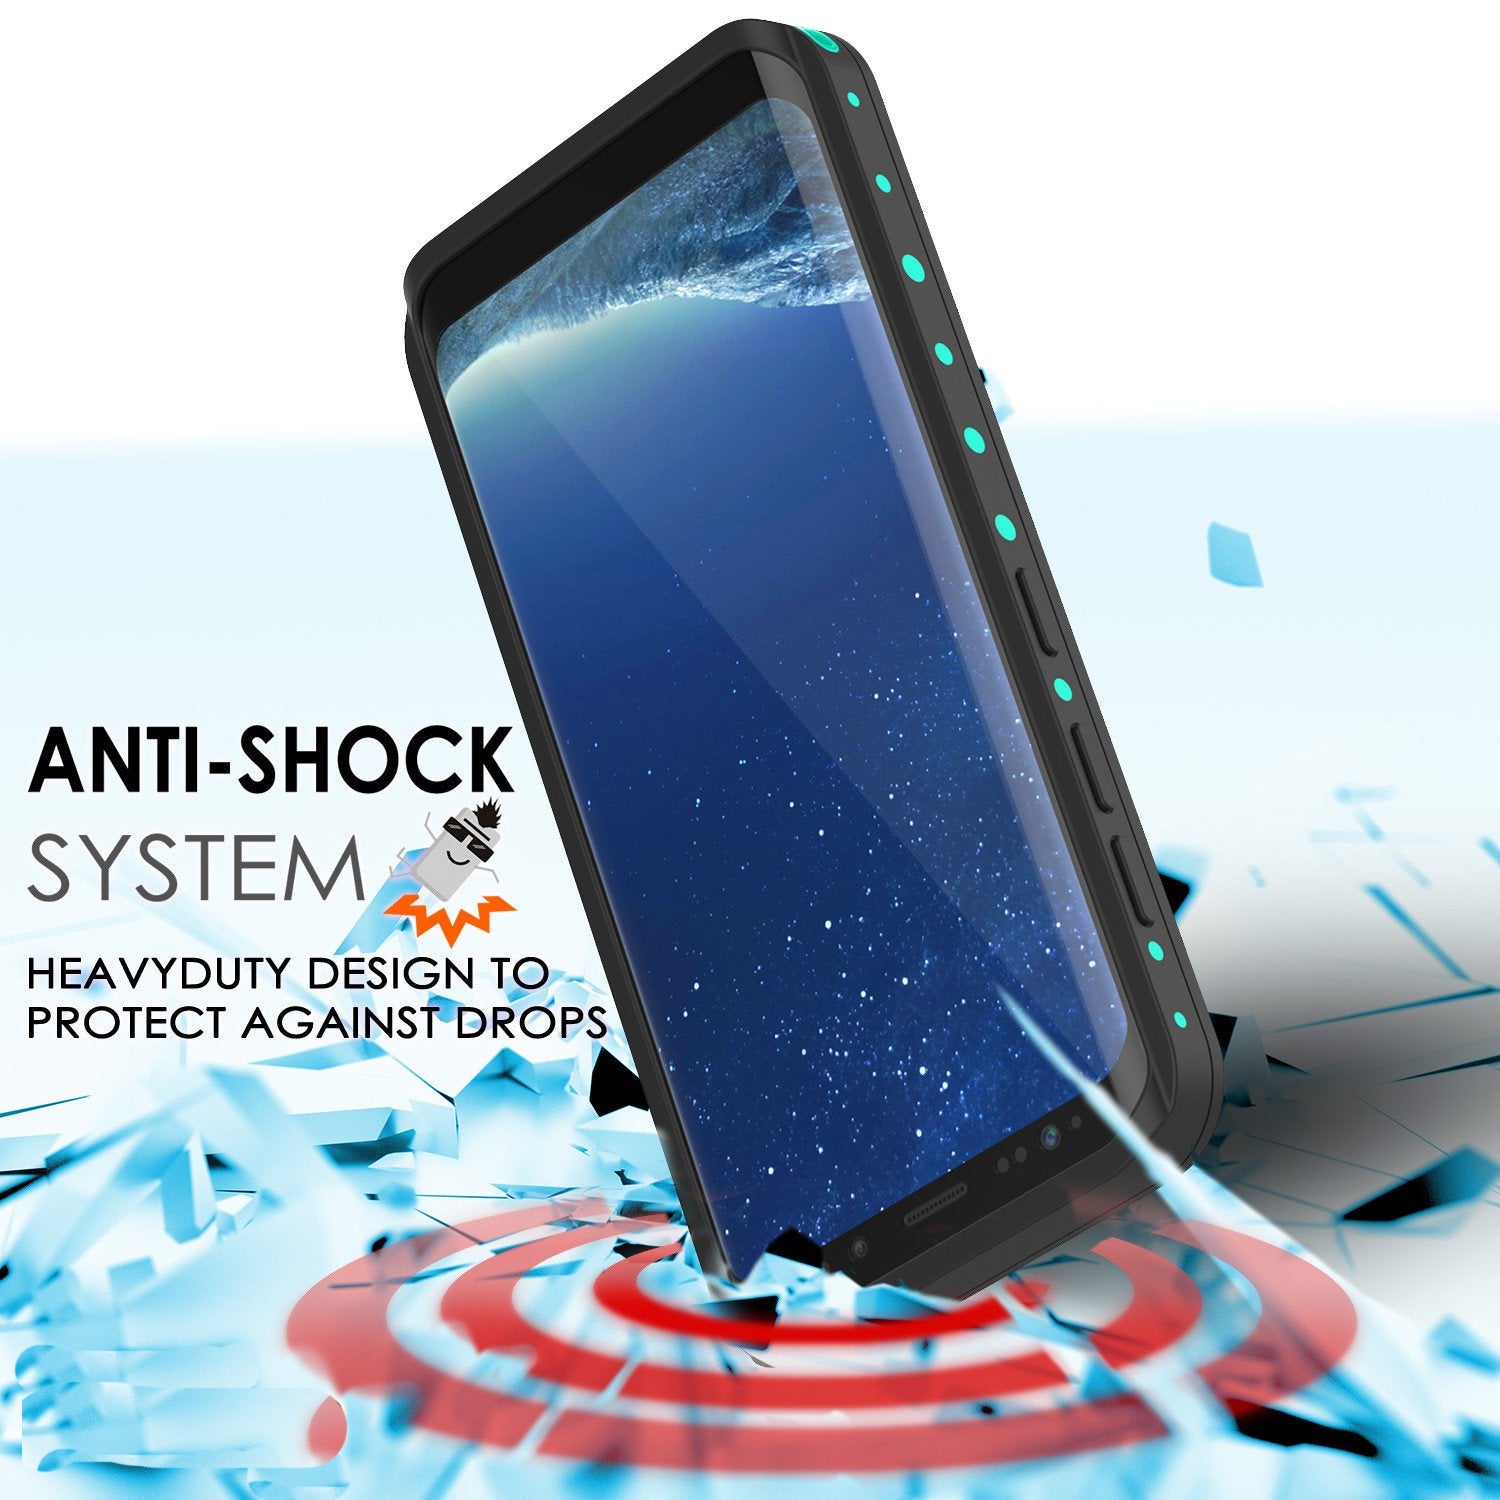 Galaxy S8 Plus Waterproof Case PunkCase StudStar Teal